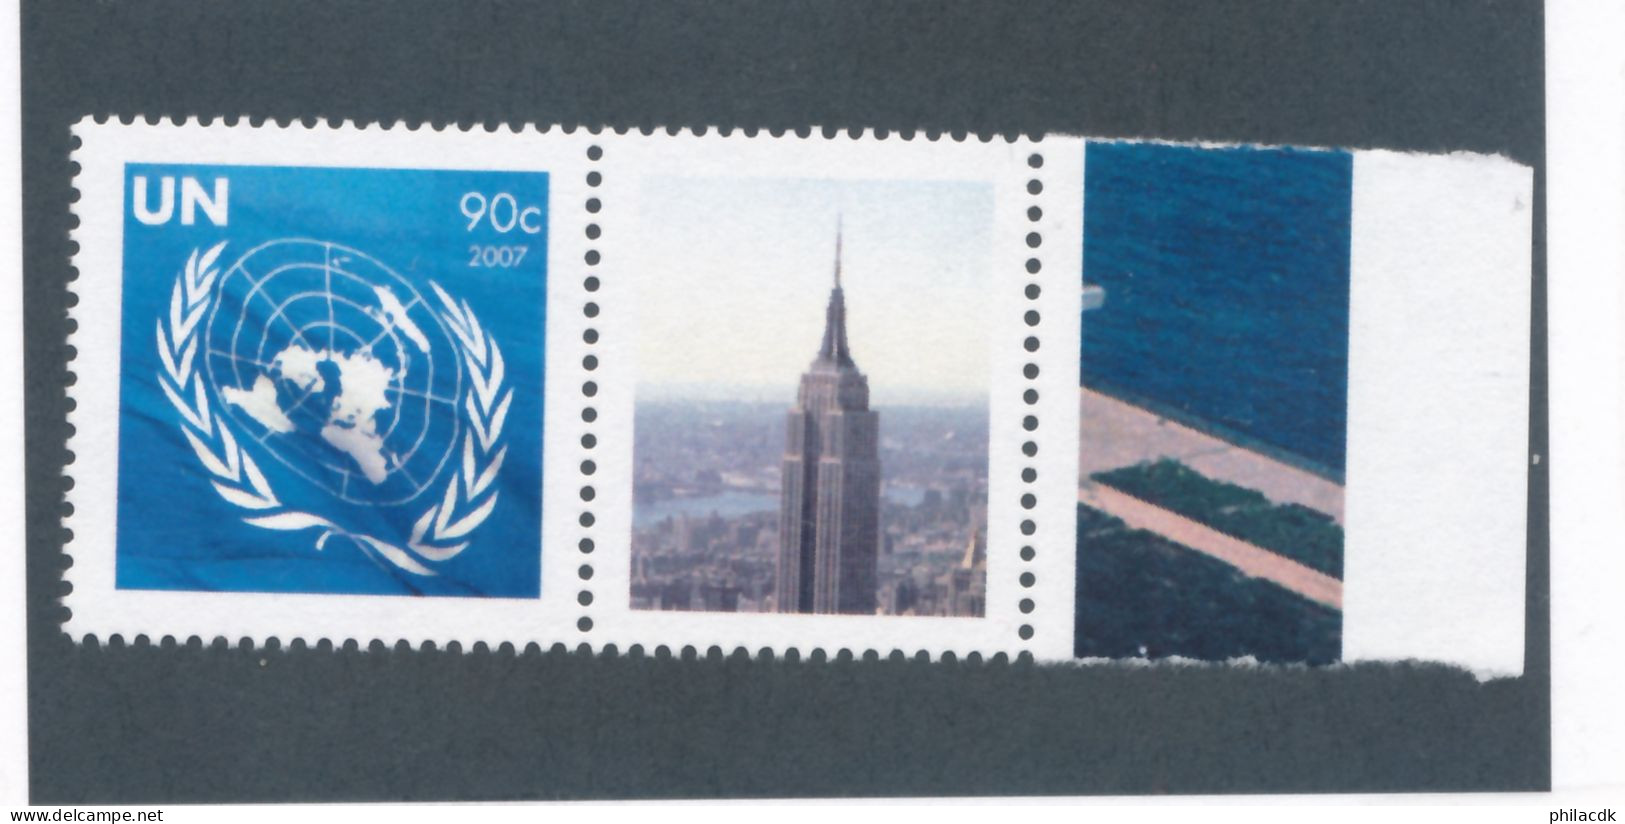 NATIONS UNIES NEW YORK - N° 1053 NEUF (*) SANS GOMME AVEC BORD DE FEUILLE - 2007 - Ungebraucht